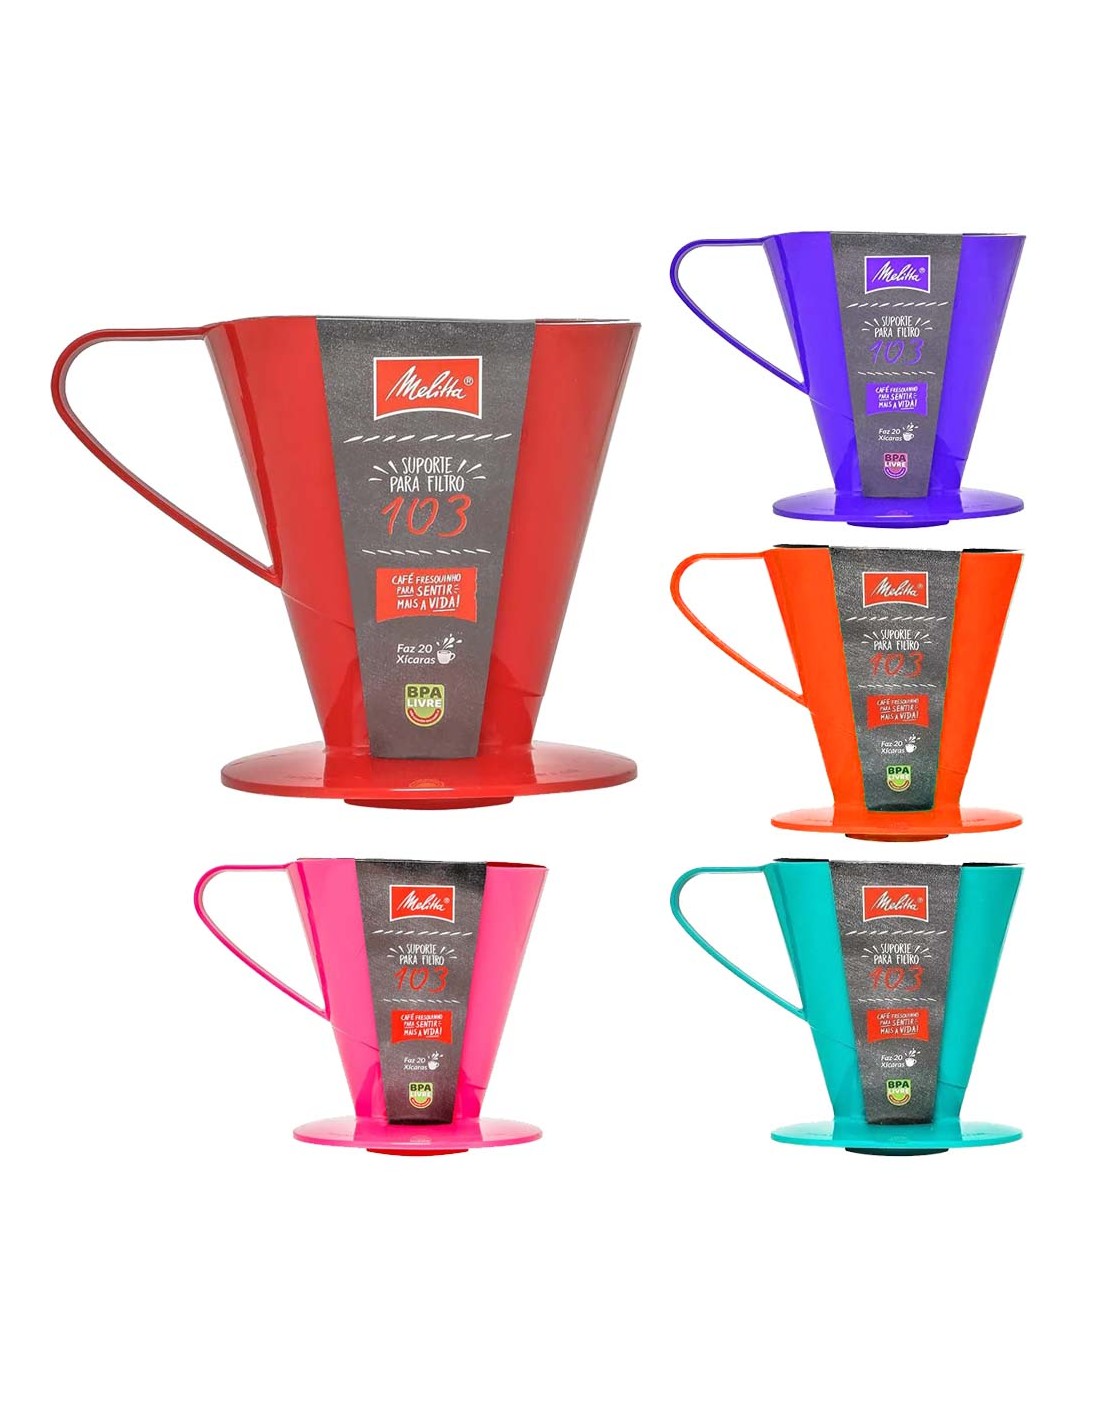 MELITTA - Coffee filter holder | 103 - 1 unit